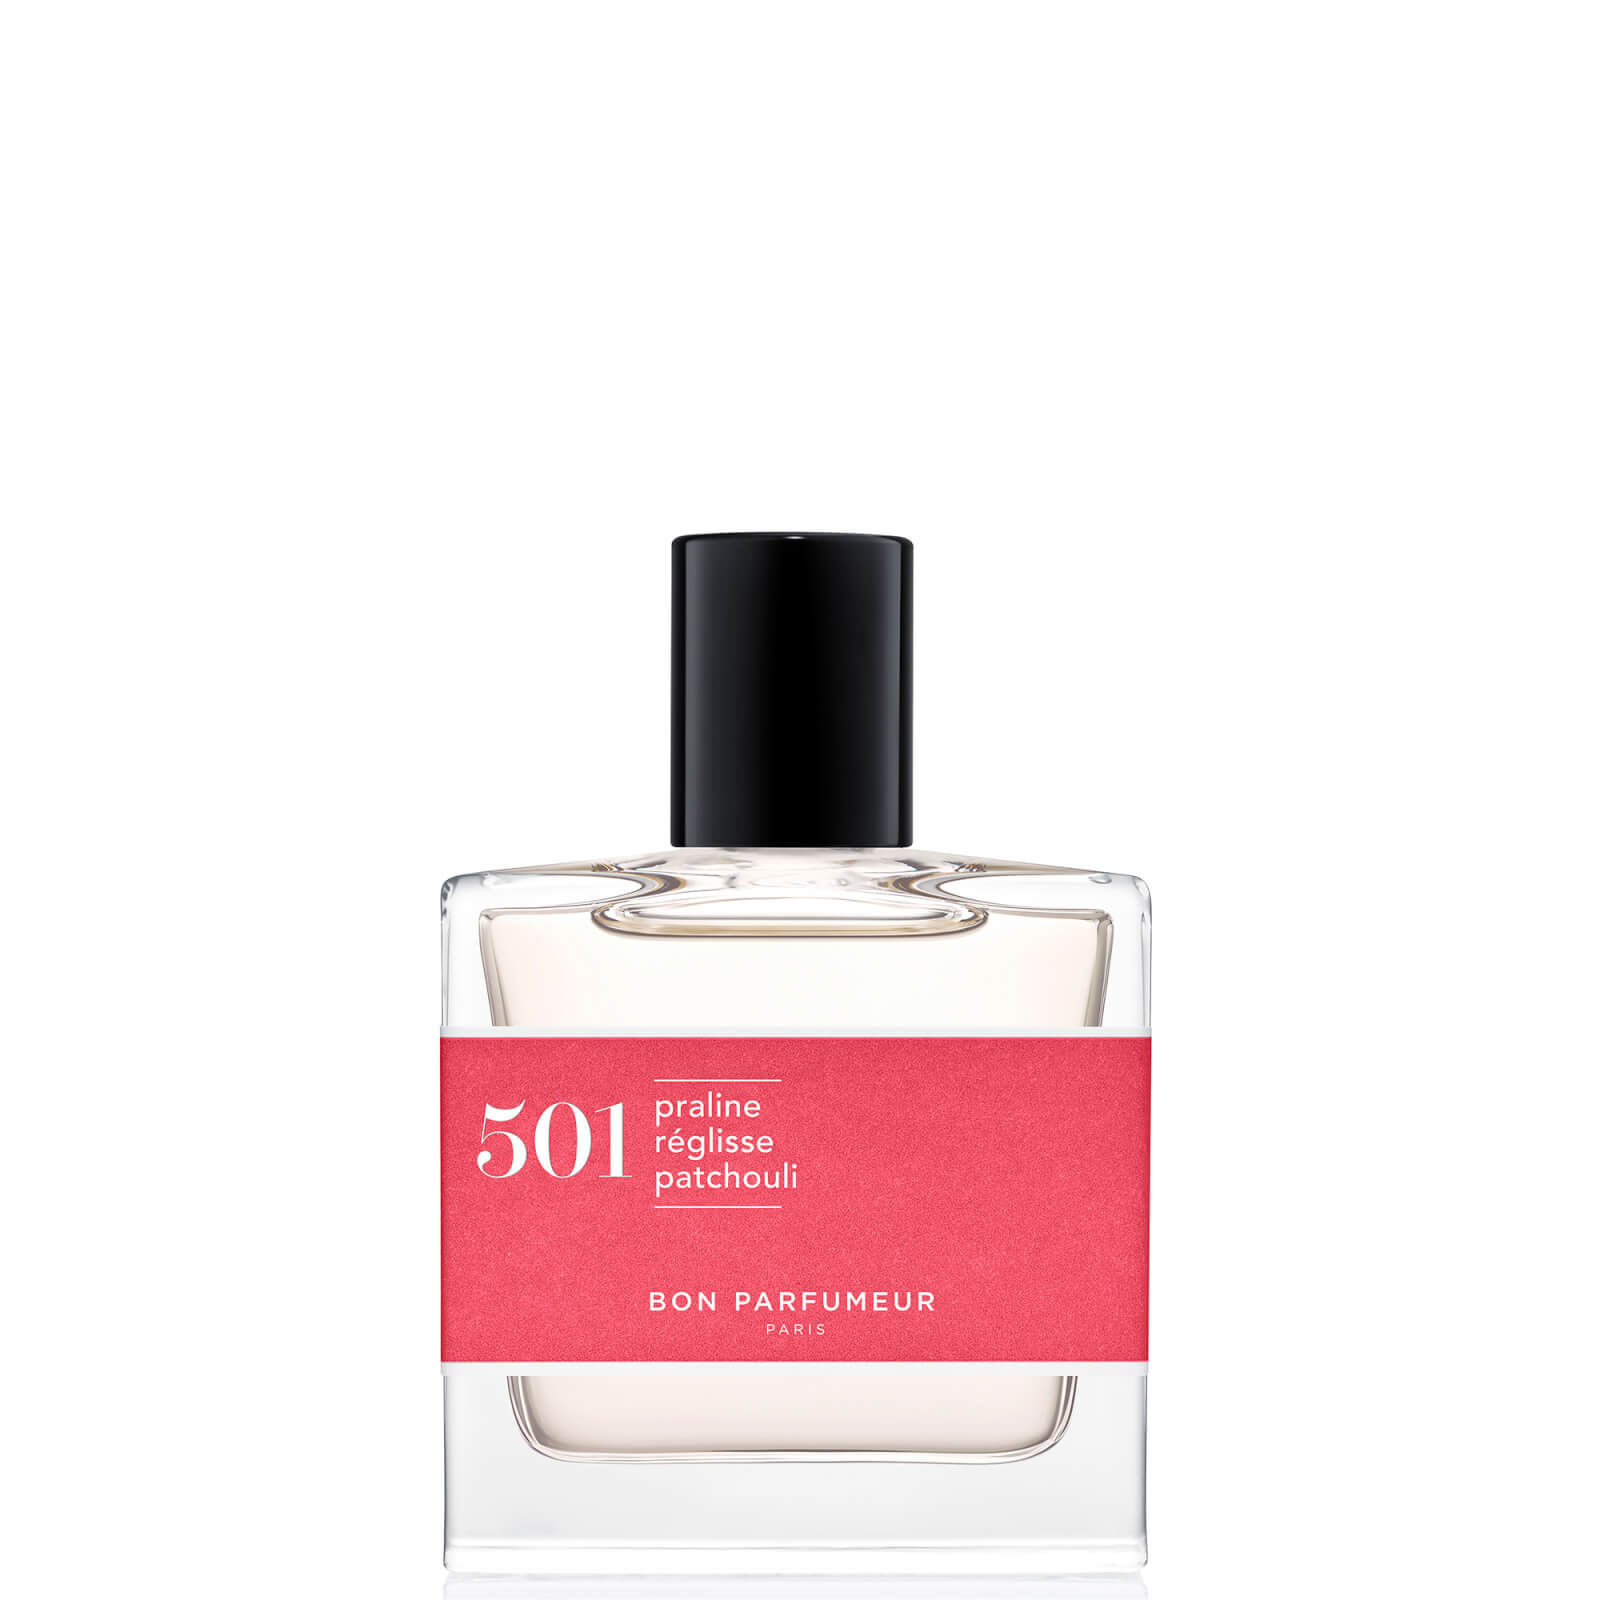 bon-parfumeur-eau-de-parfum-spray-unisex-30-ml-5